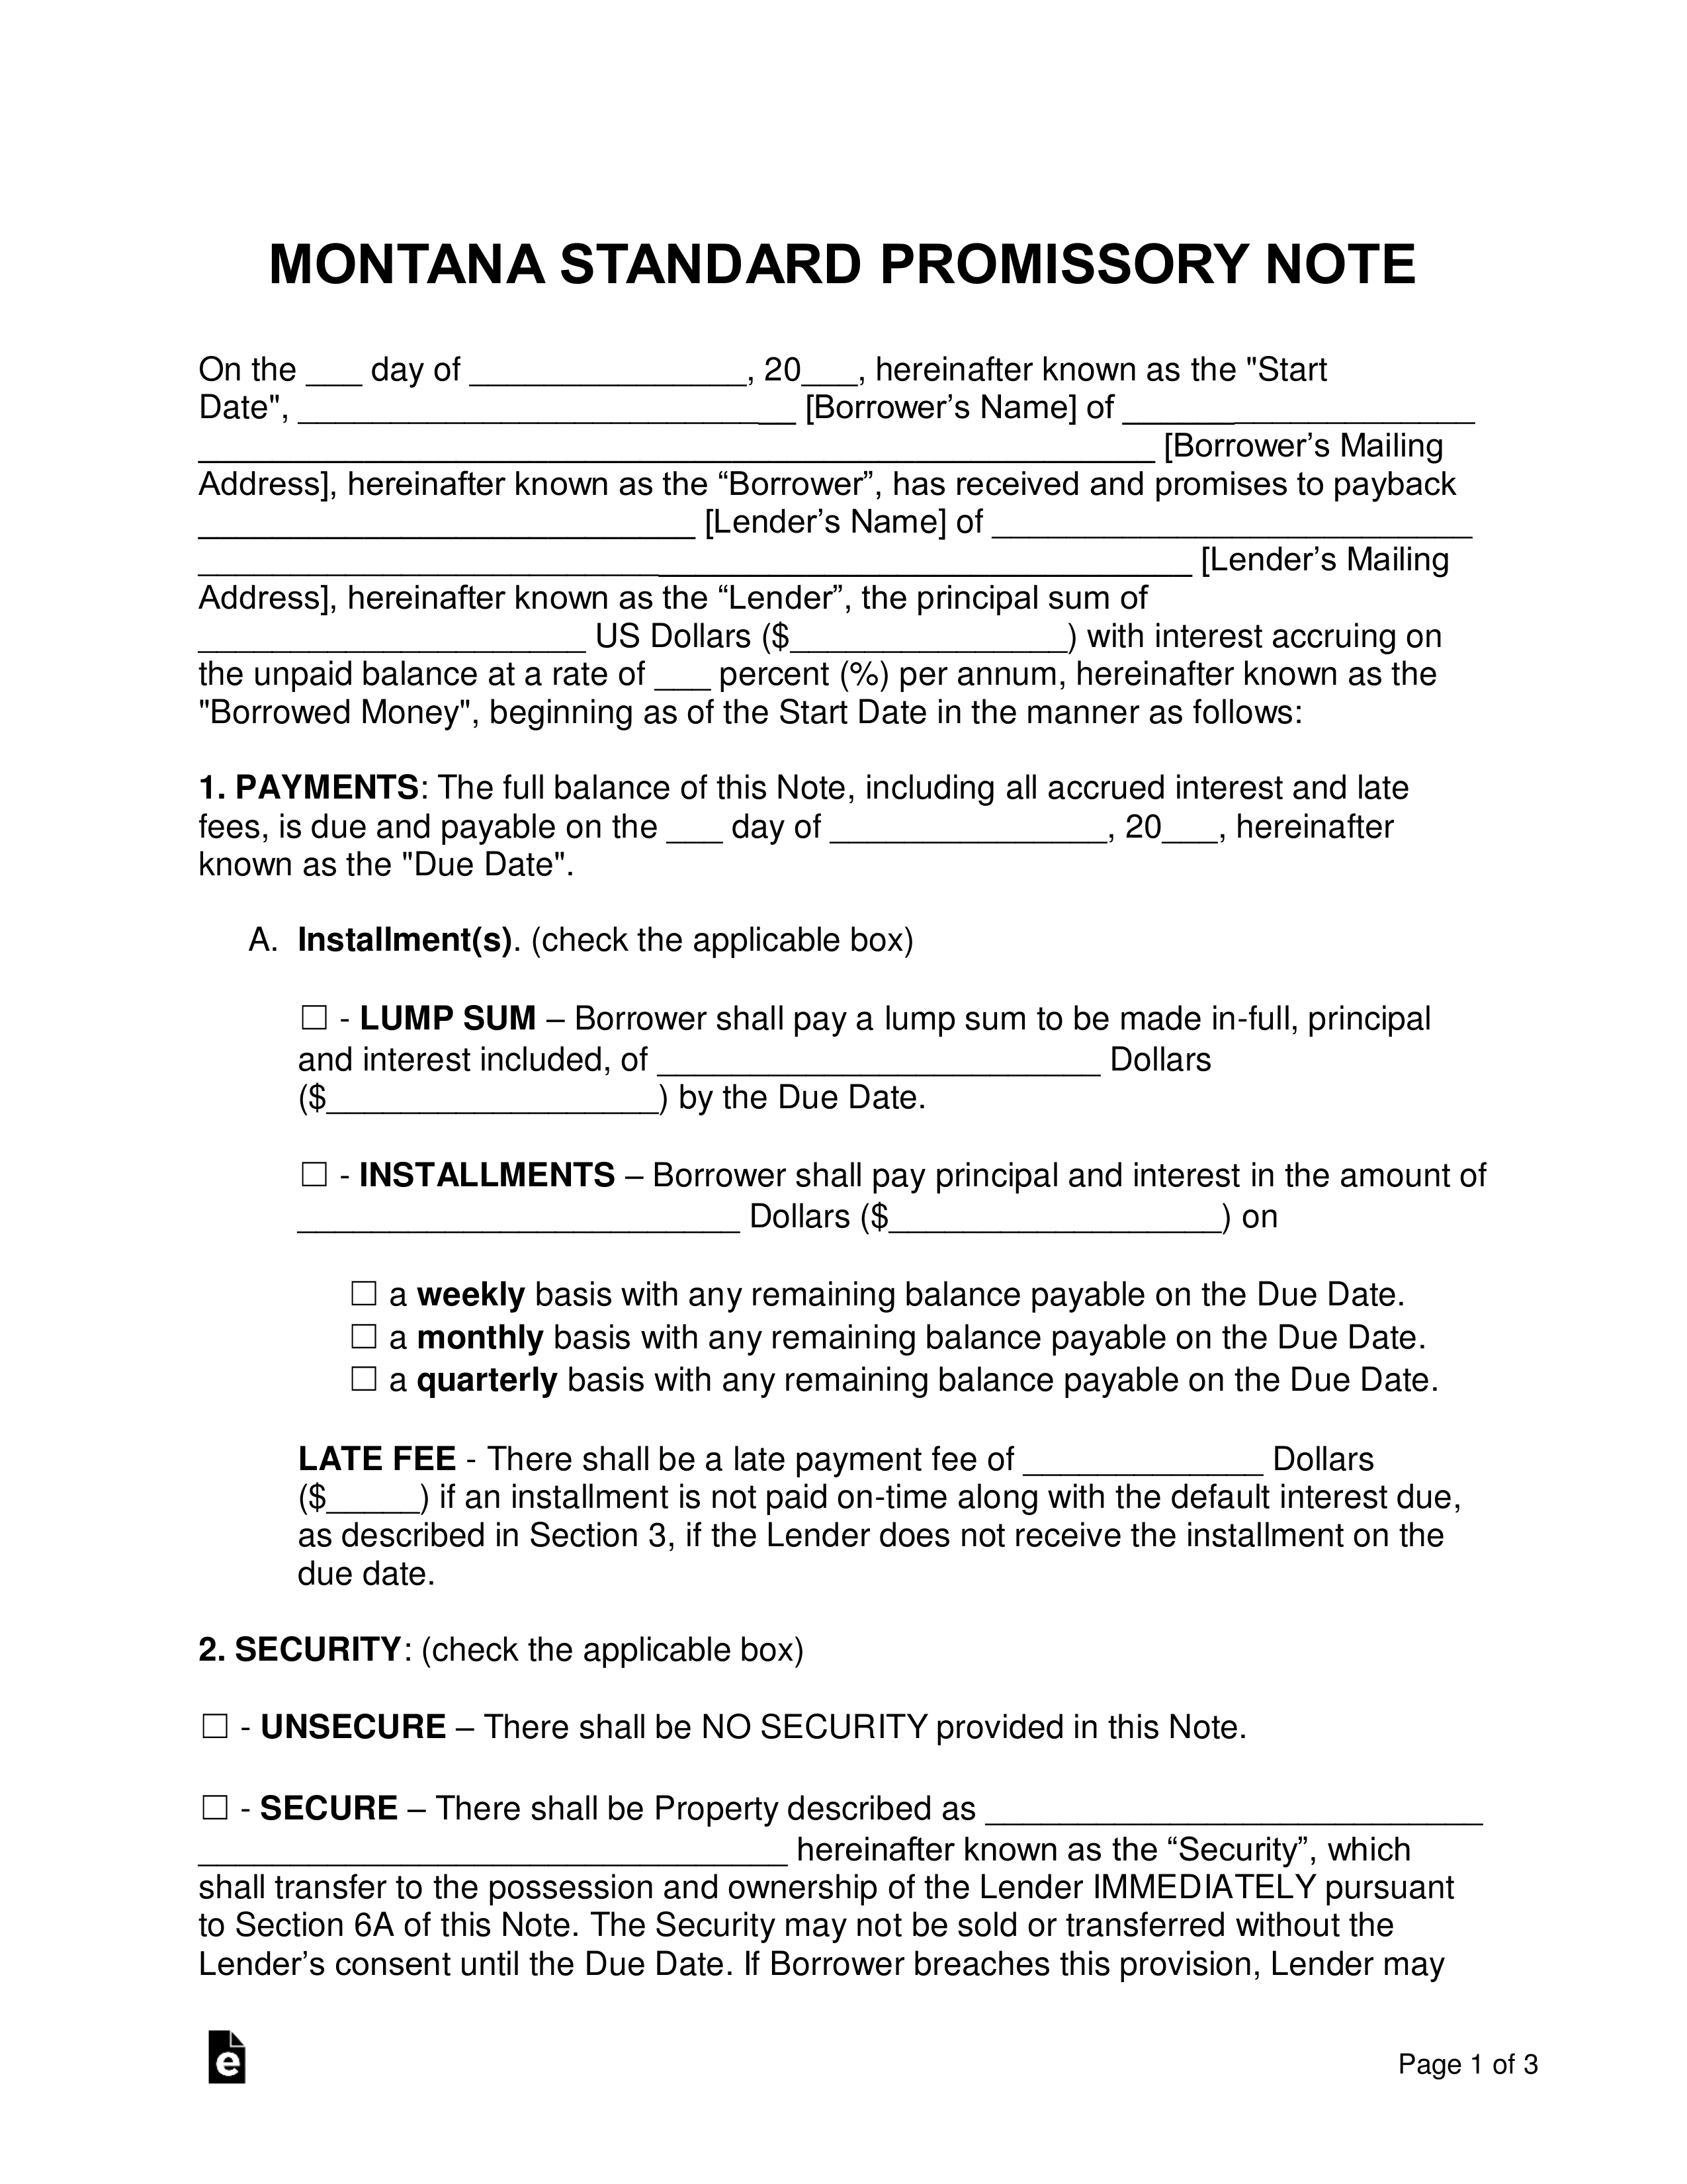 Montana Promissory Note Templates (2)